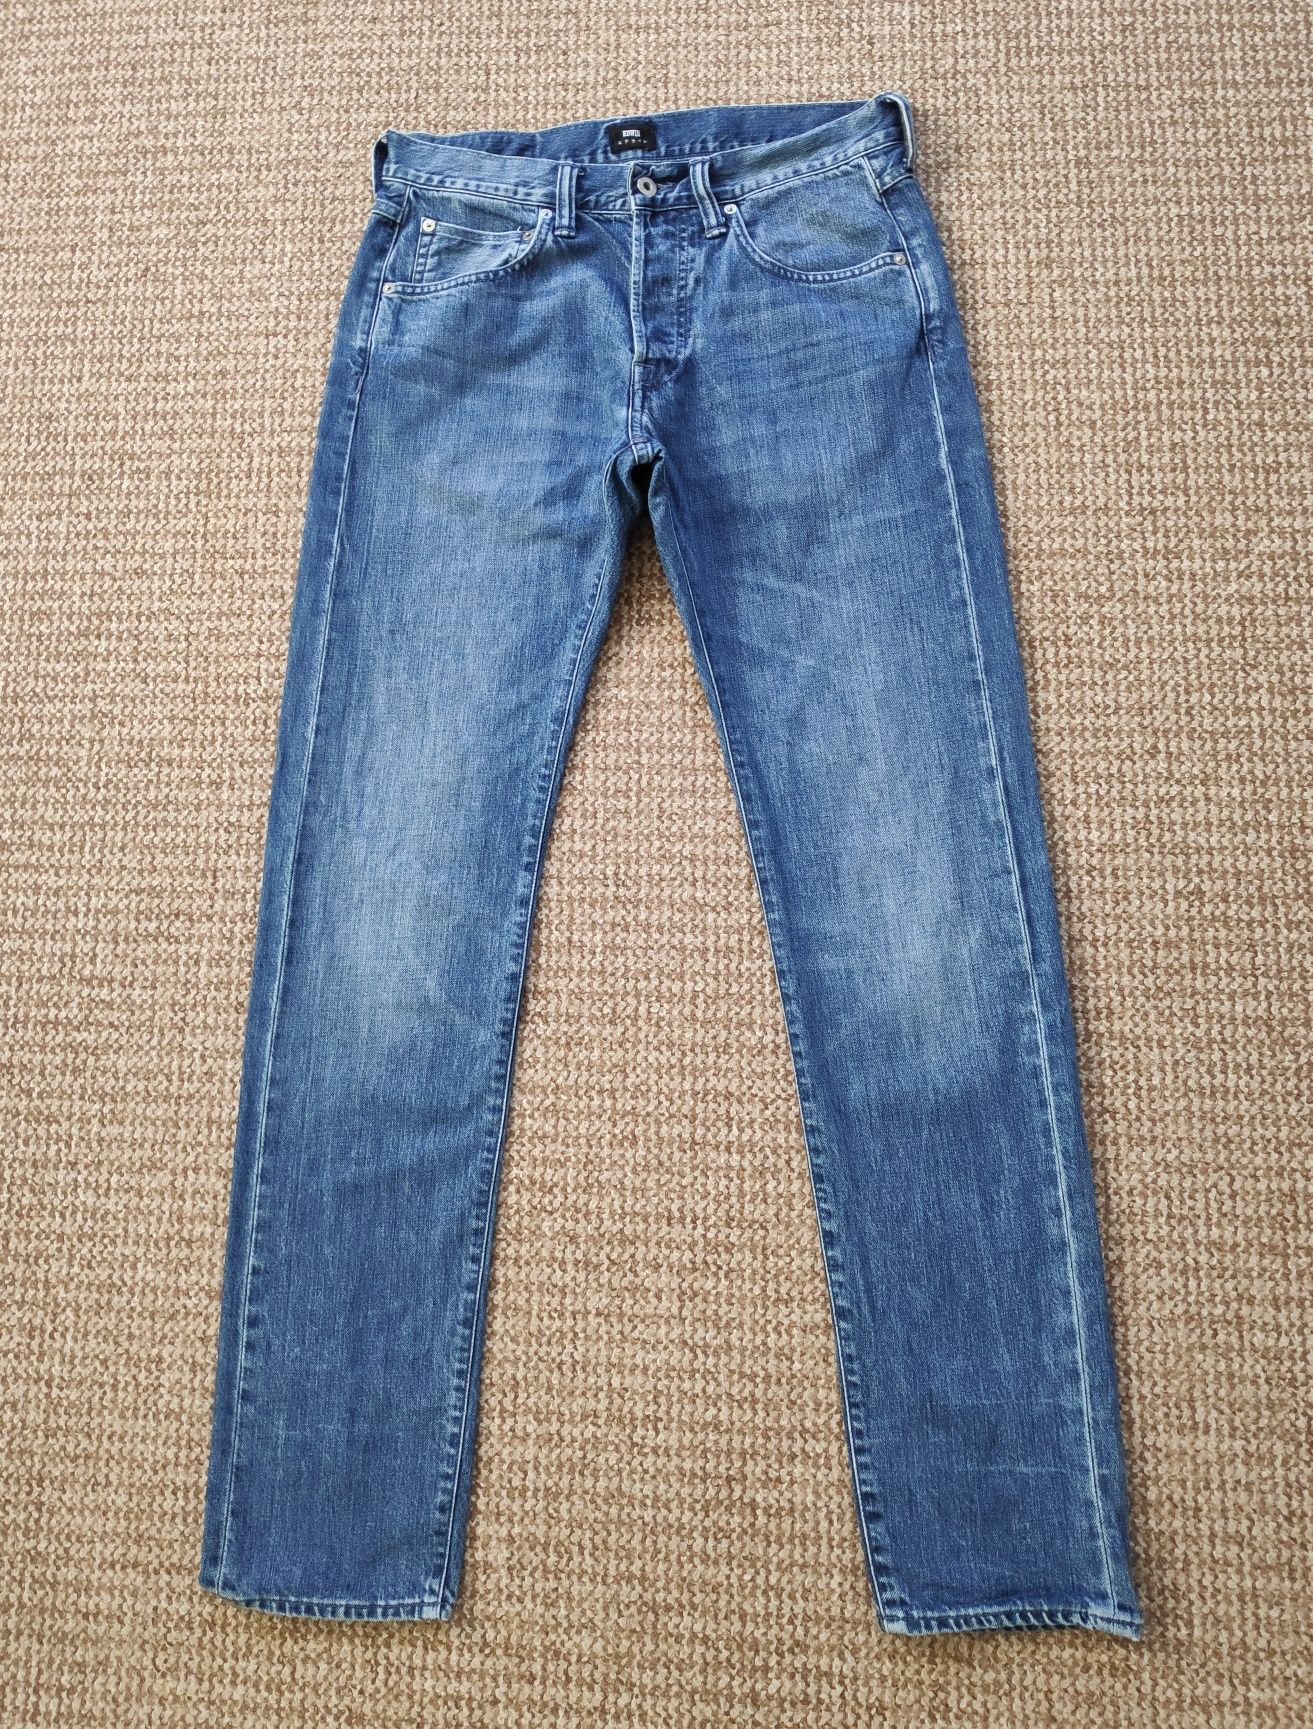 Edwin ed-55 джинсы regular tapered оригинал W30 L32 голубые